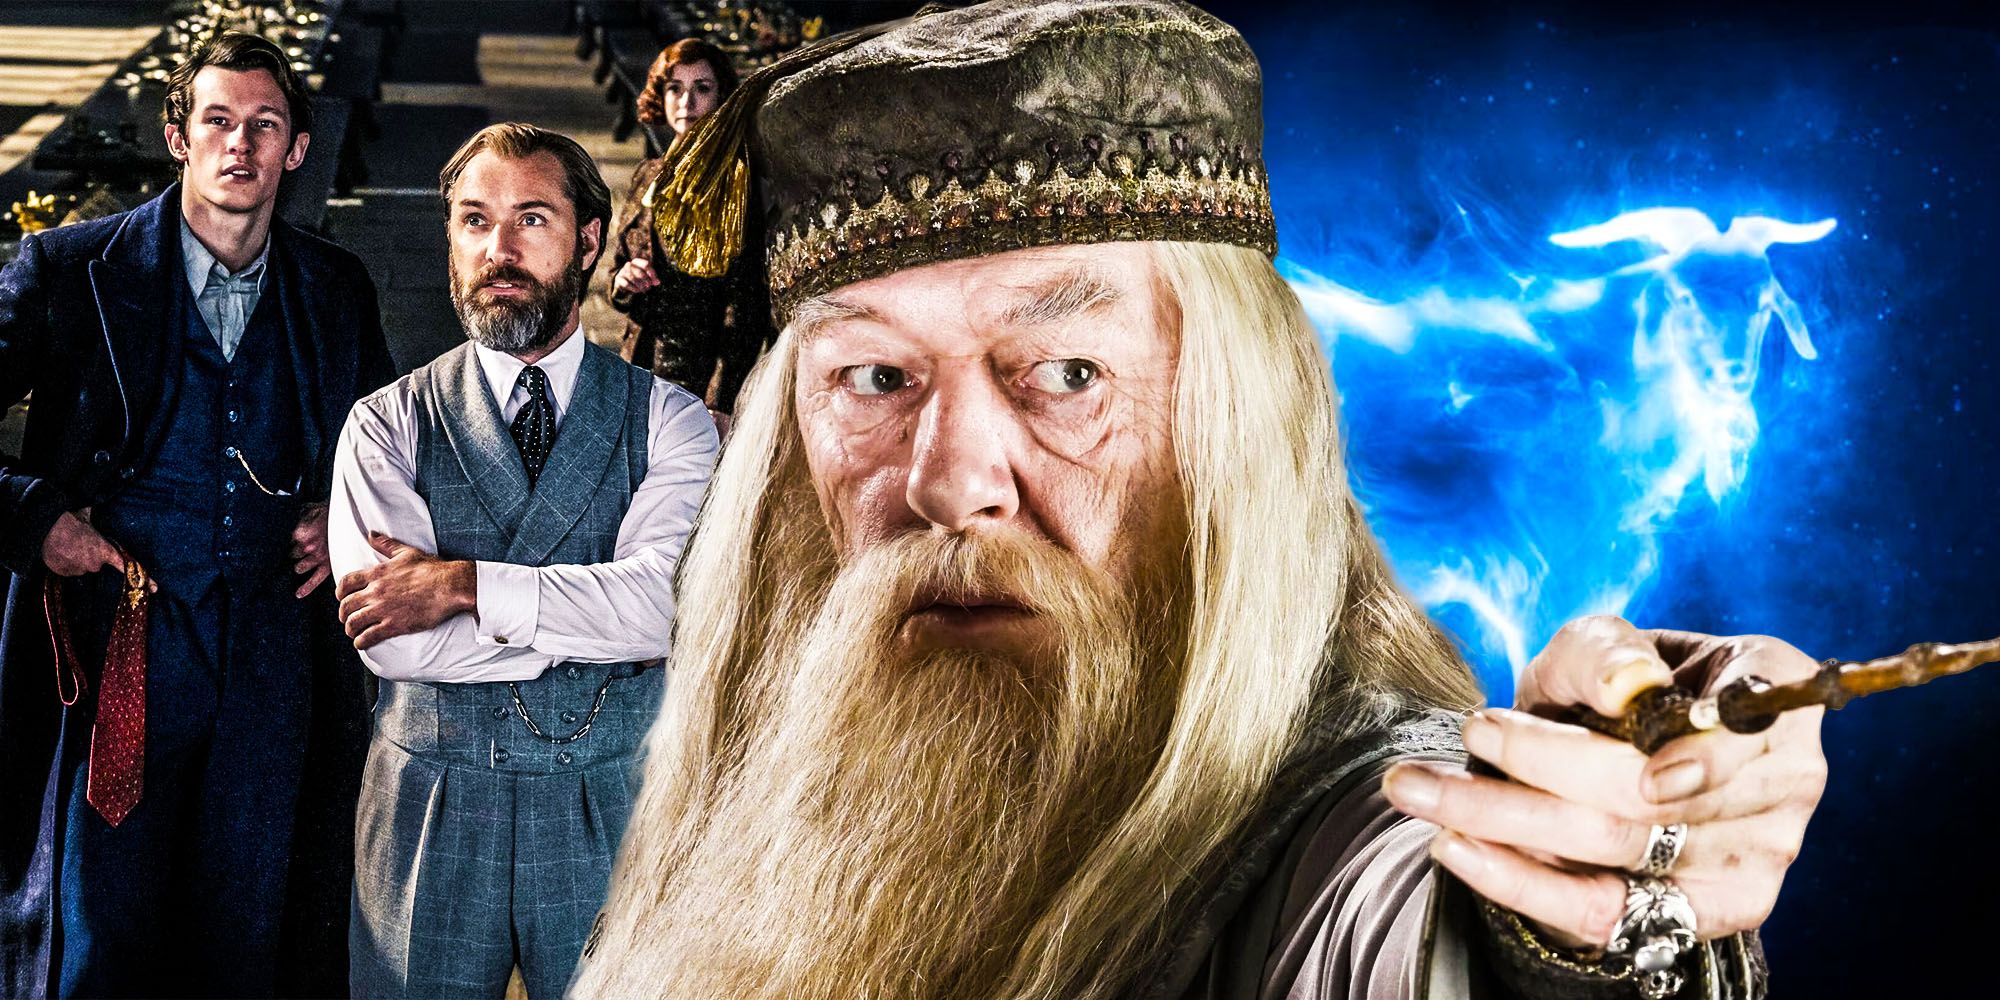 Fantastic beasts 3 Can Properly Explain The Weirdest Dumbledore Mystery